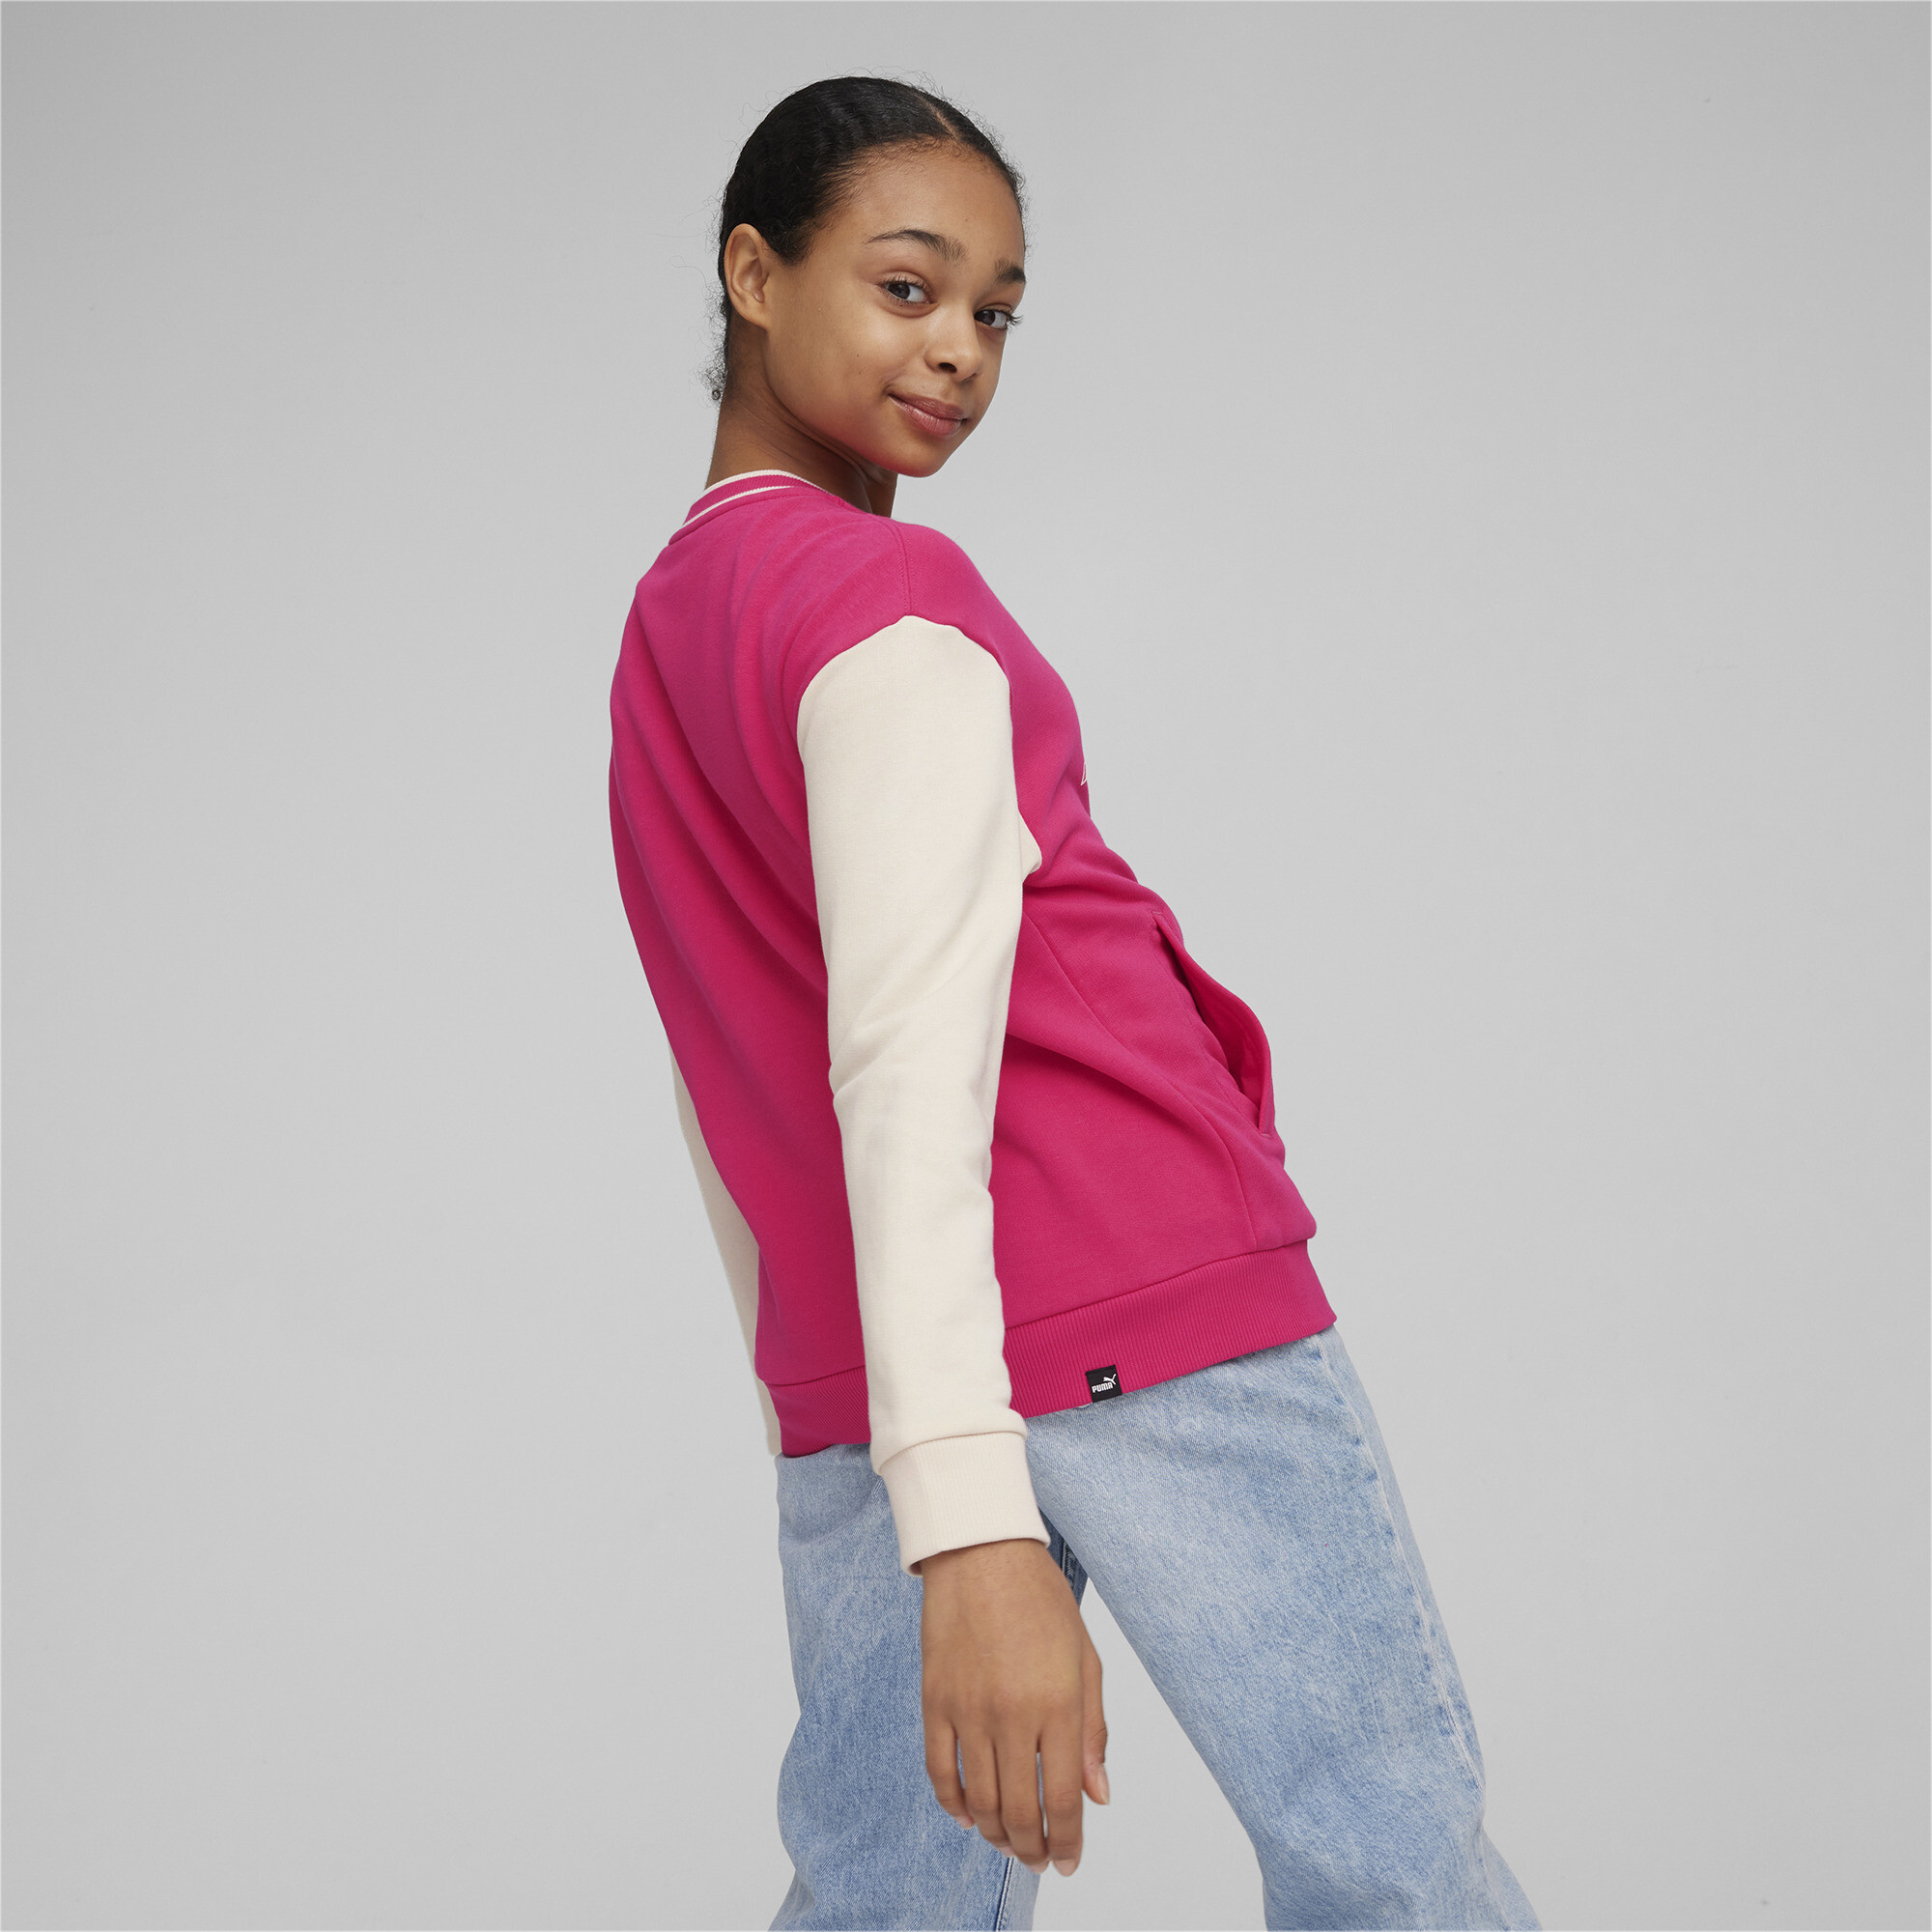 Women's Puma SQUAD Youth Jacket, Pink, Size 13-14Y, Clothing